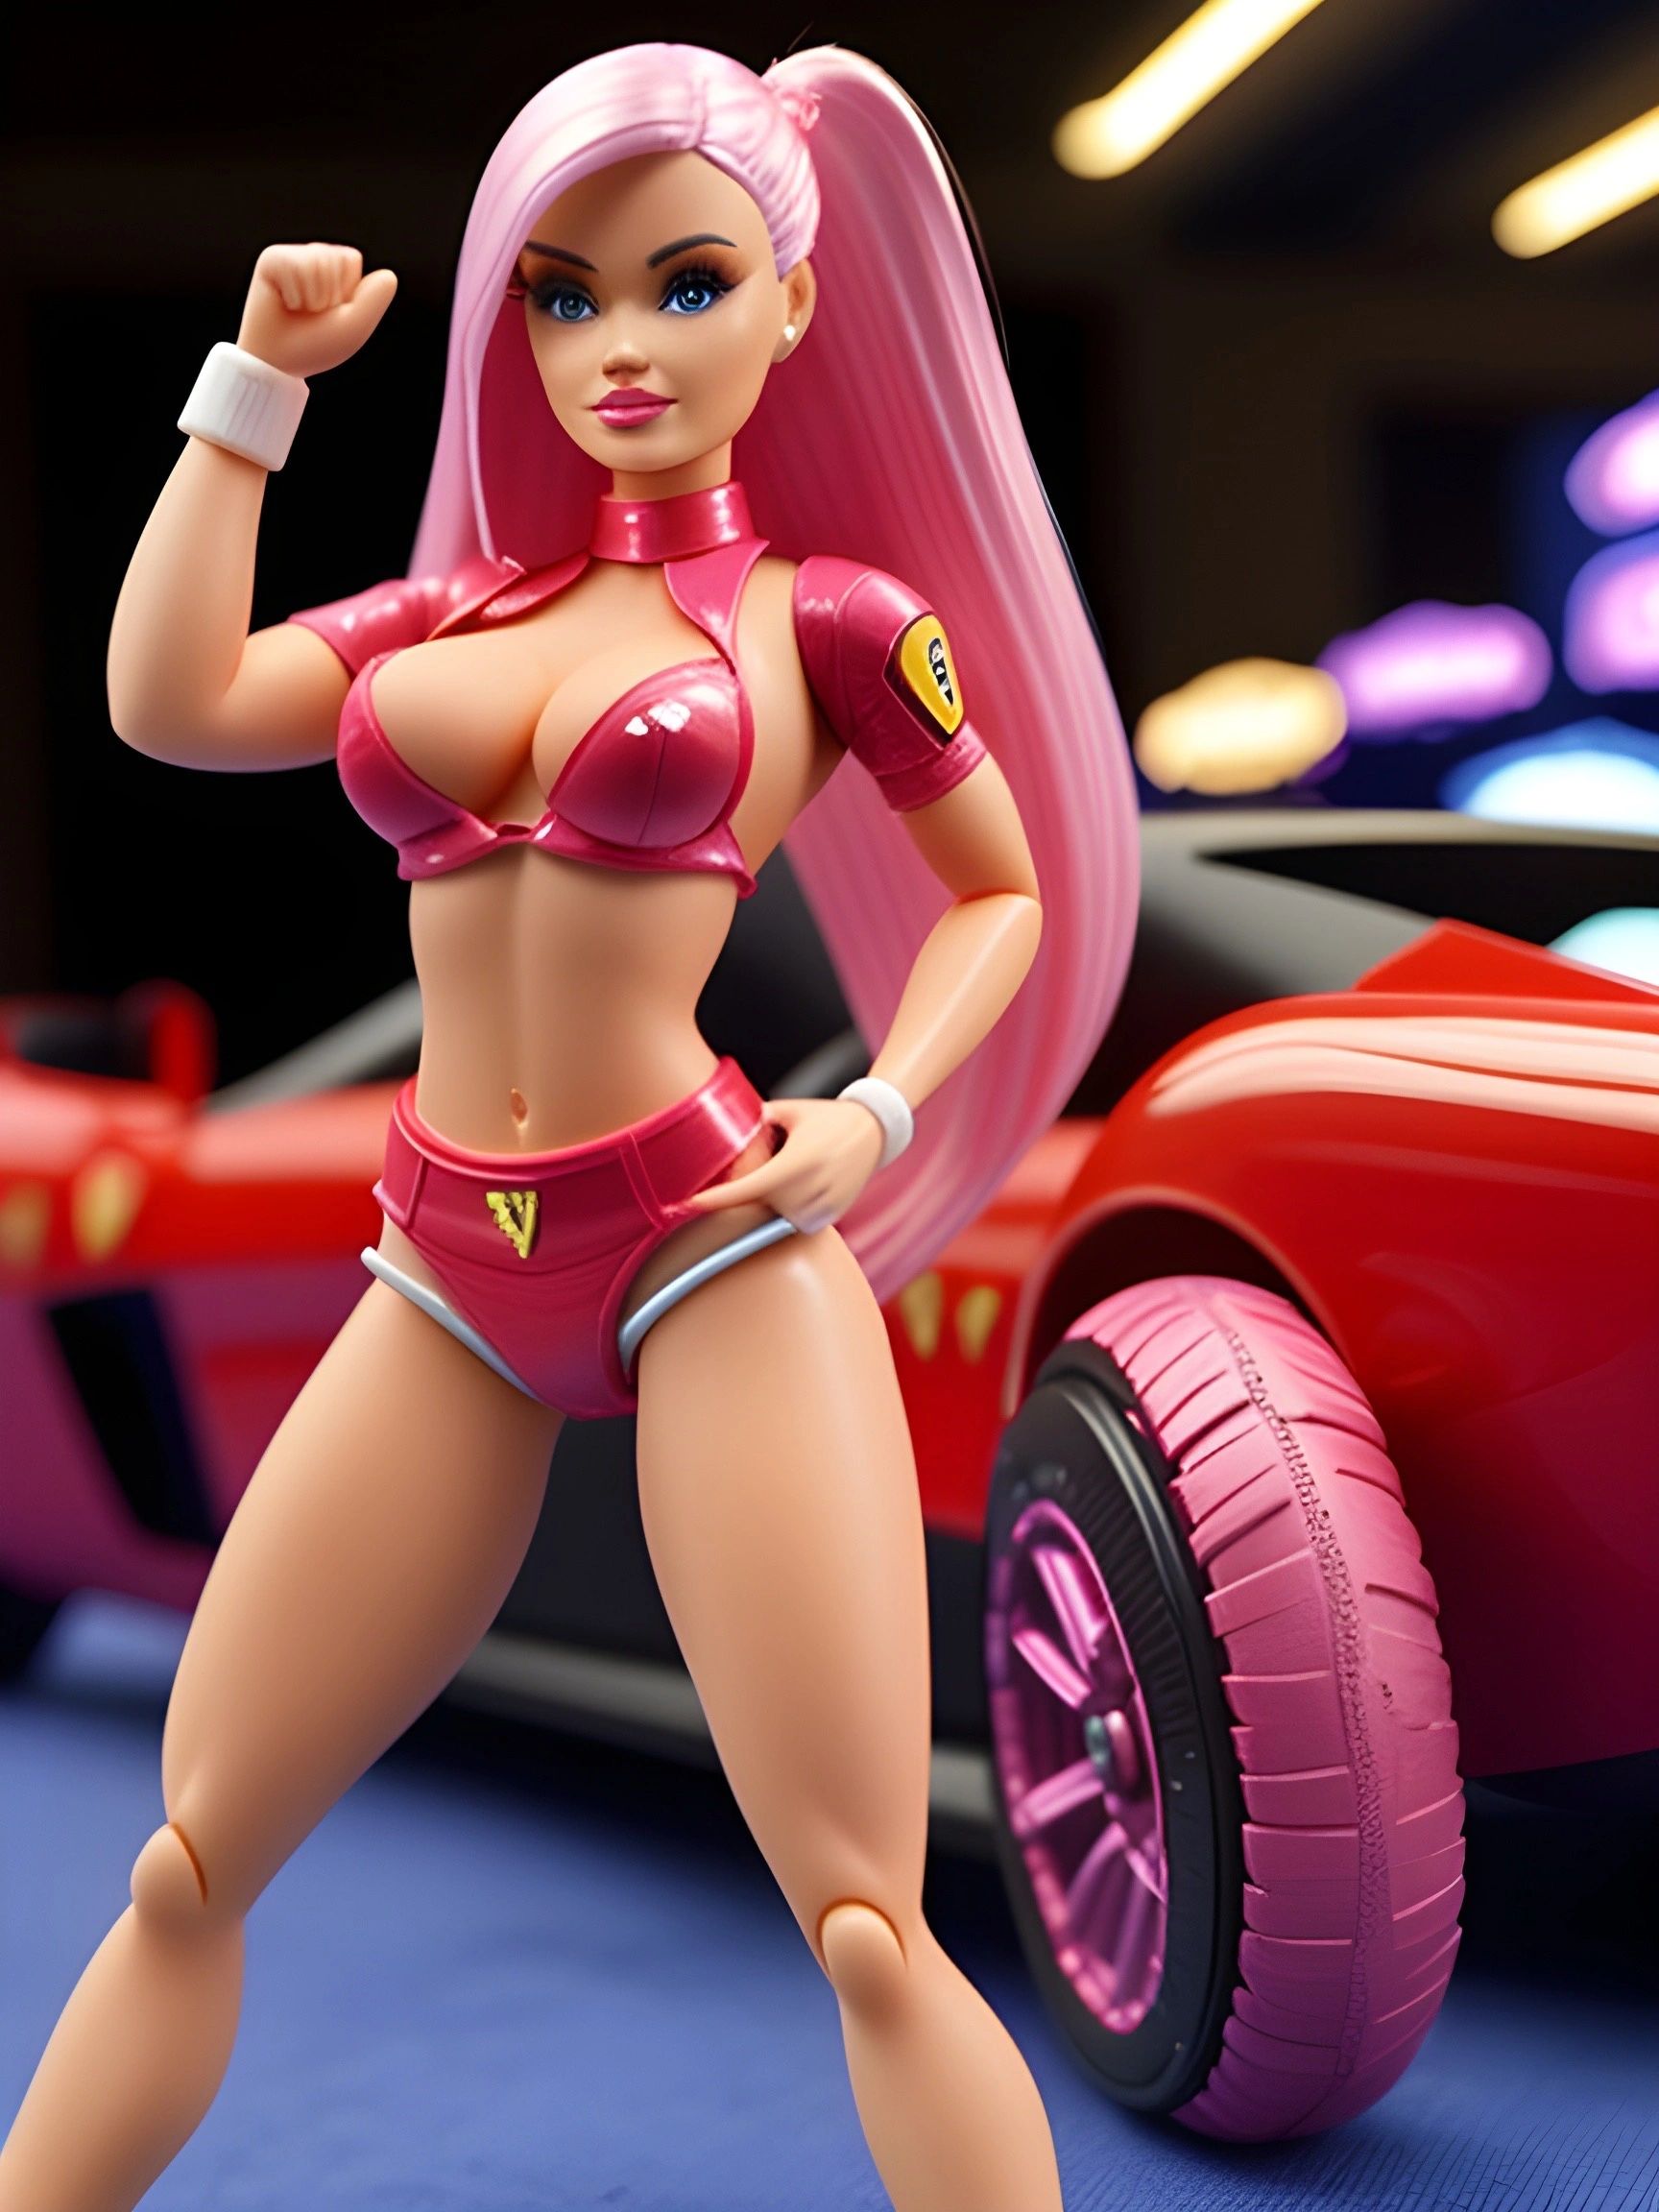 Jonny Ferrari’s car and girls bikini animated 